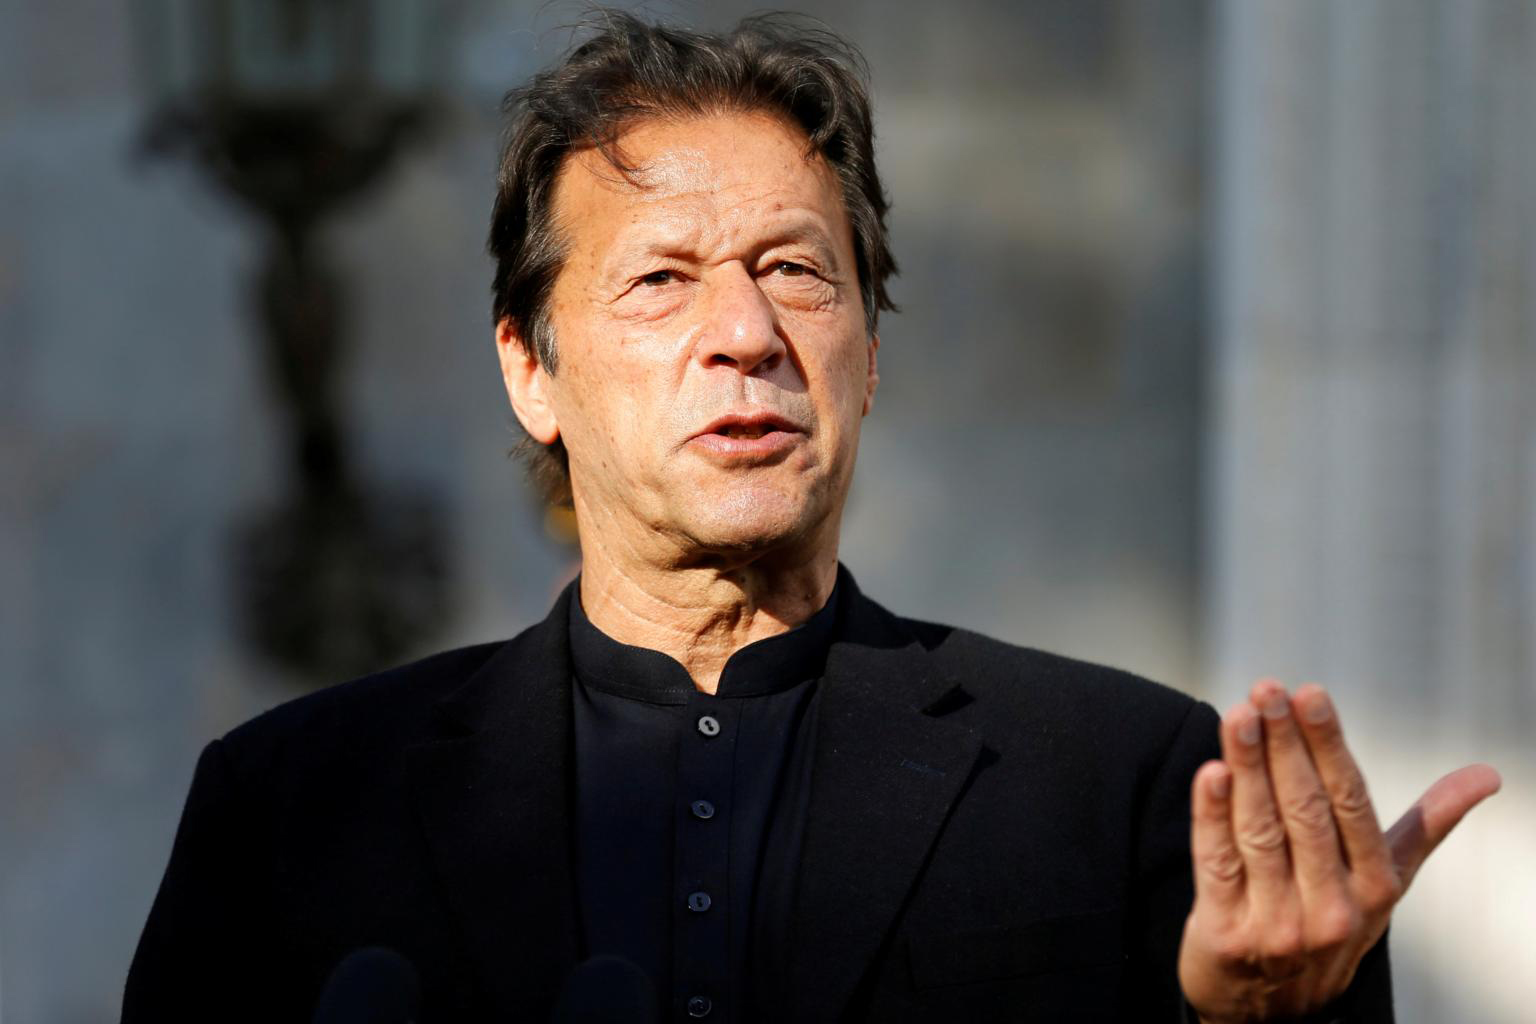 Pakistan ex-PM Imran Khan's graft conviction suspended - lawyer